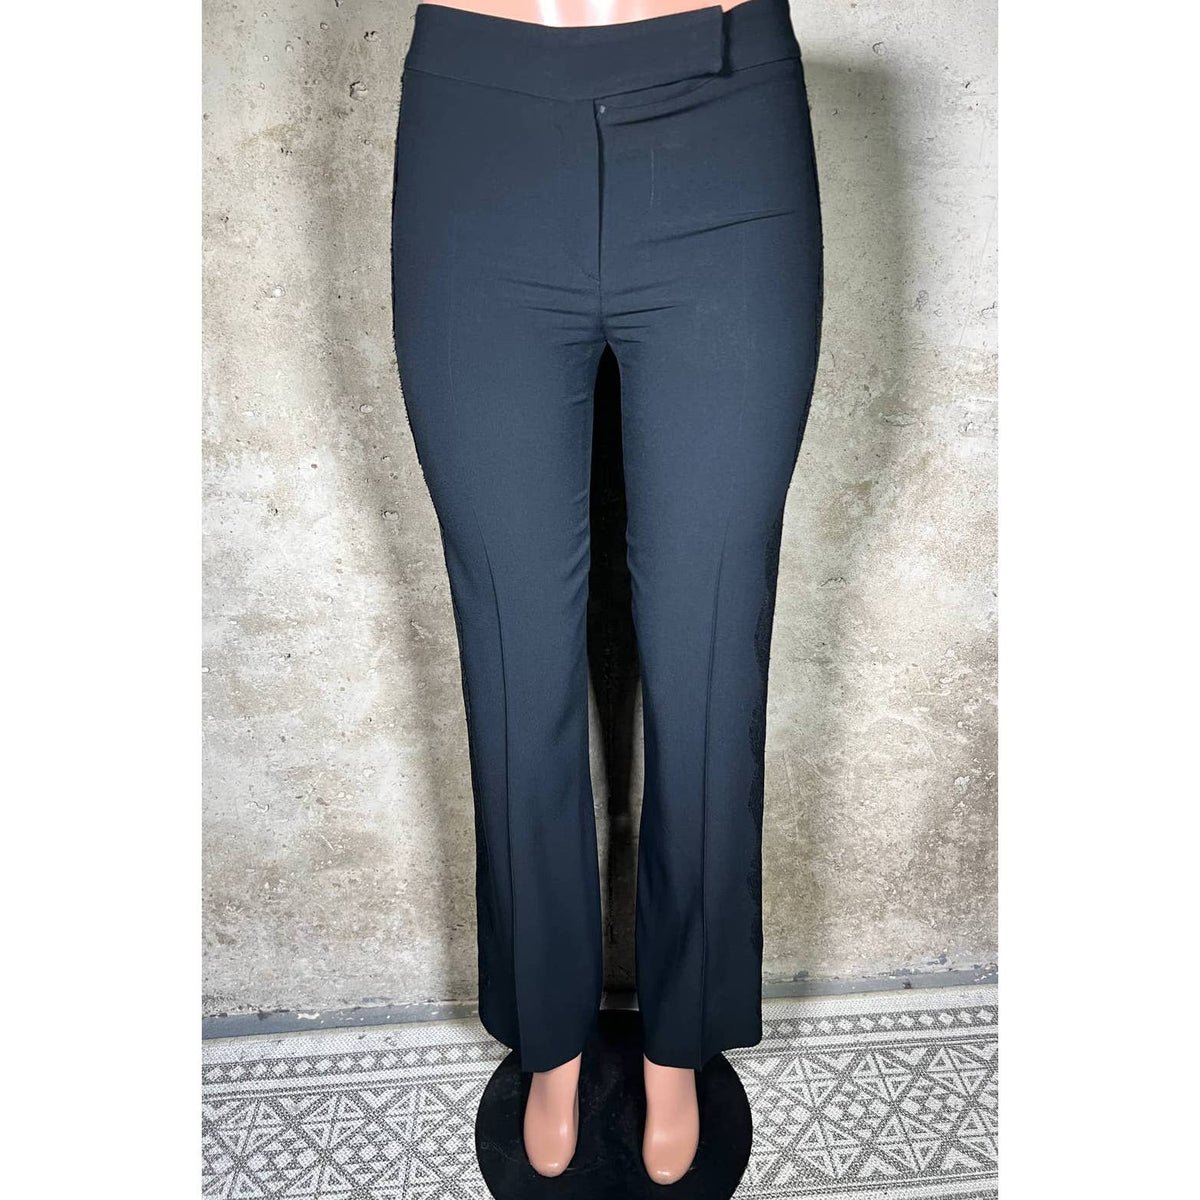 Valentino Black Lace Pants Sz.4(40)